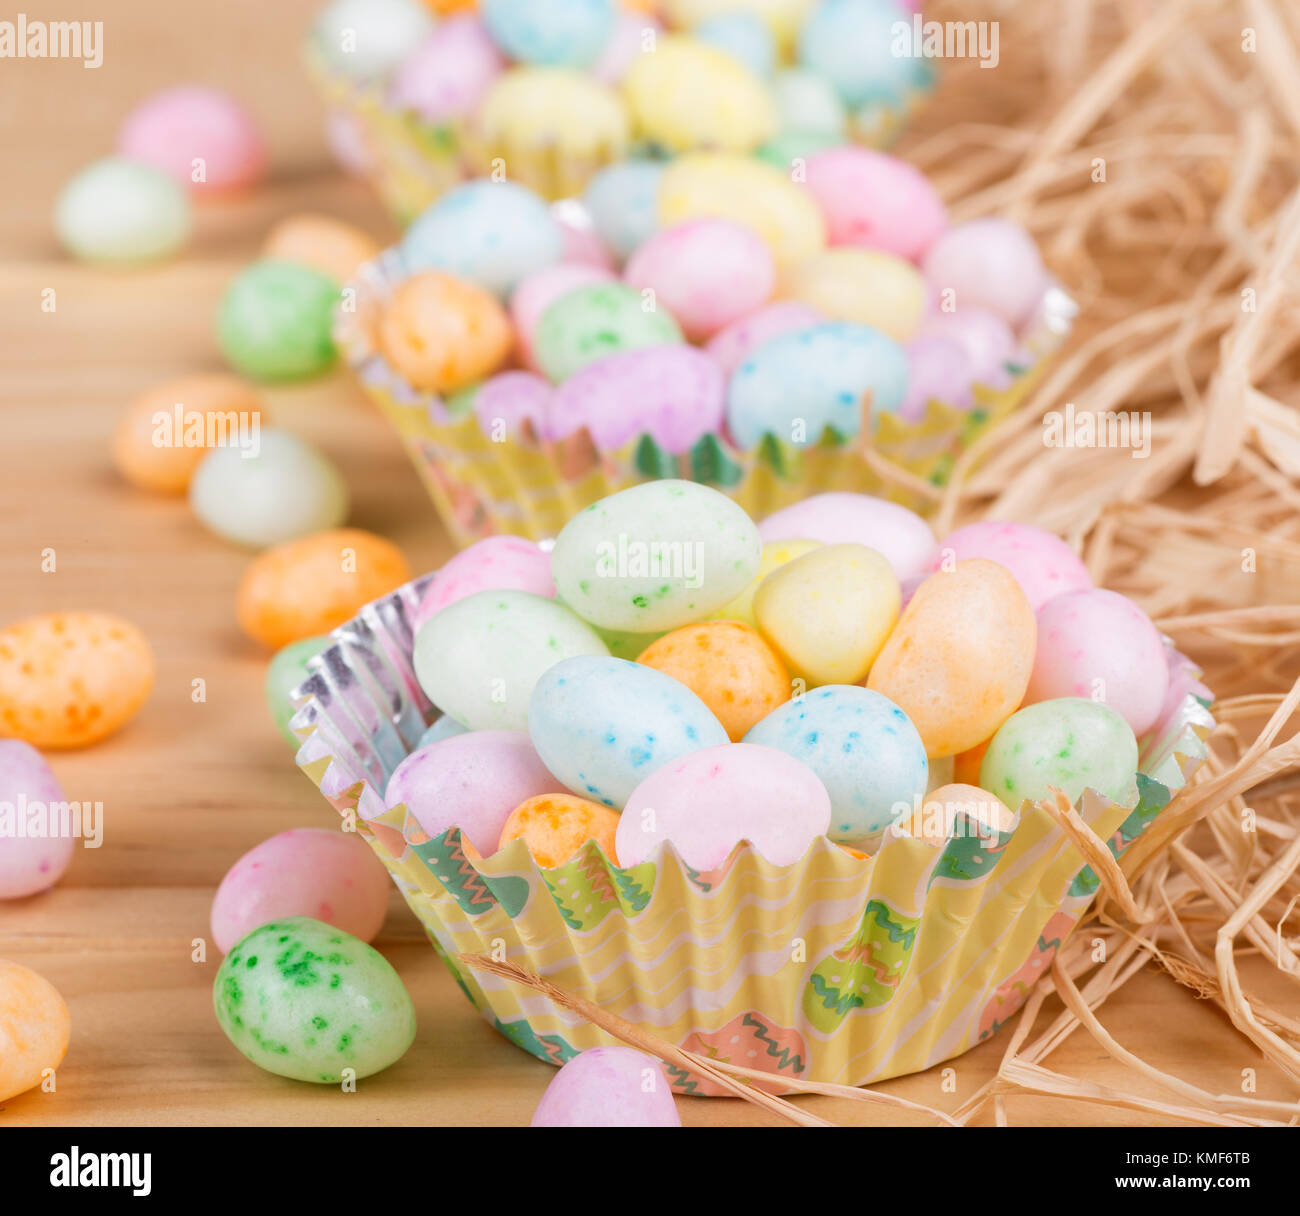 Pascua coloridos Jelly Beans en tazas de papel sobre una superficie de madera Foto de stock